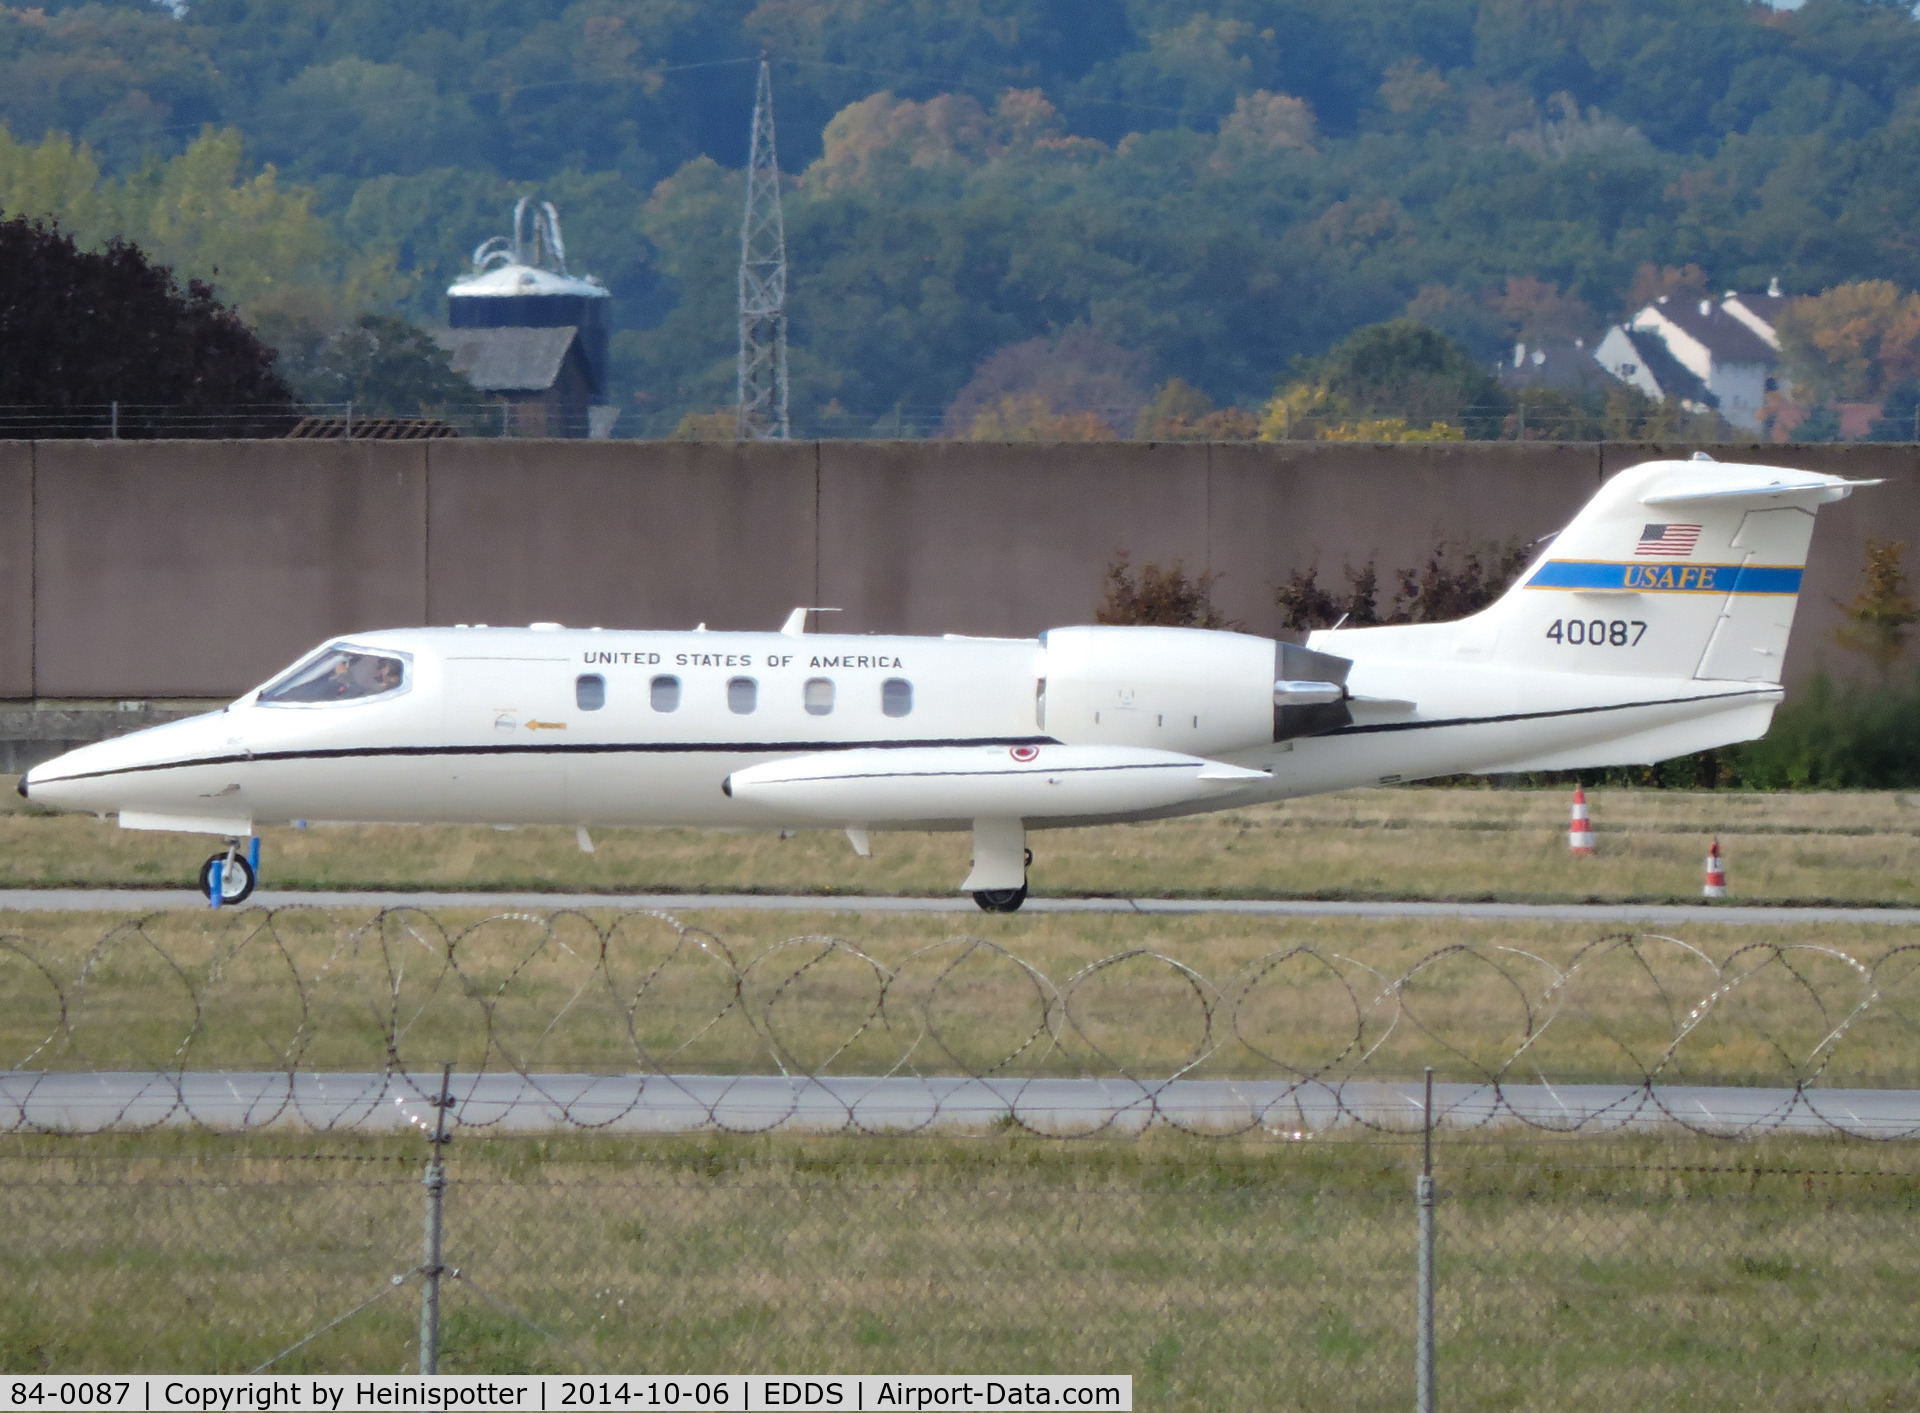 84-0087, 1984 Gates Learjet C-21A C/N 35A-533, 84-0087 at Stuttgart Airport.